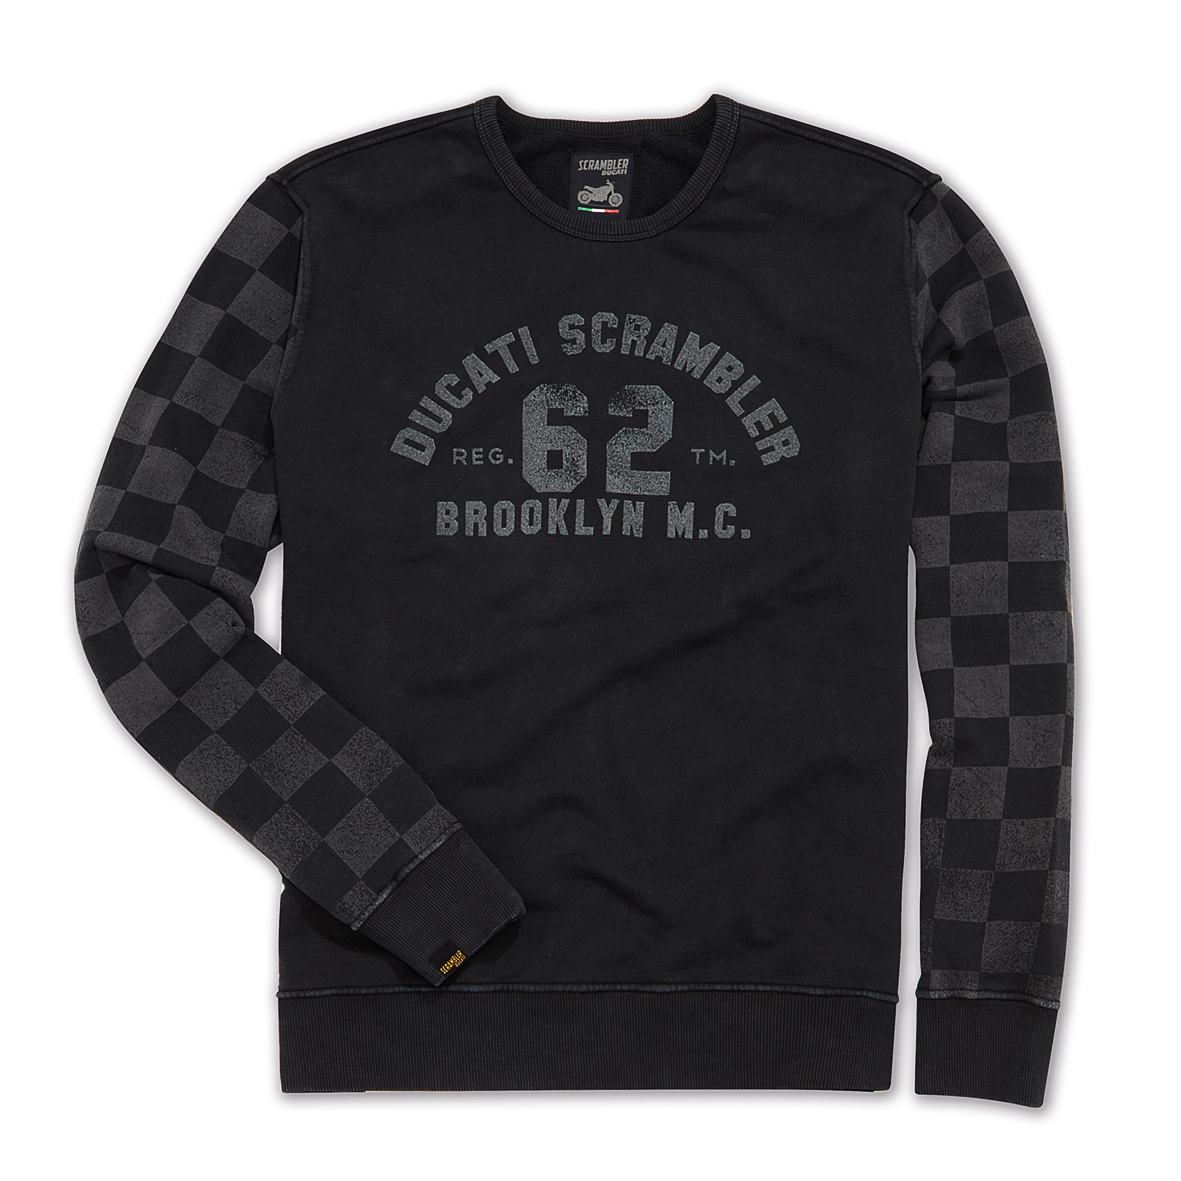 Ducati Scrambler Brooklyn Cafe Men's Sweatshirt